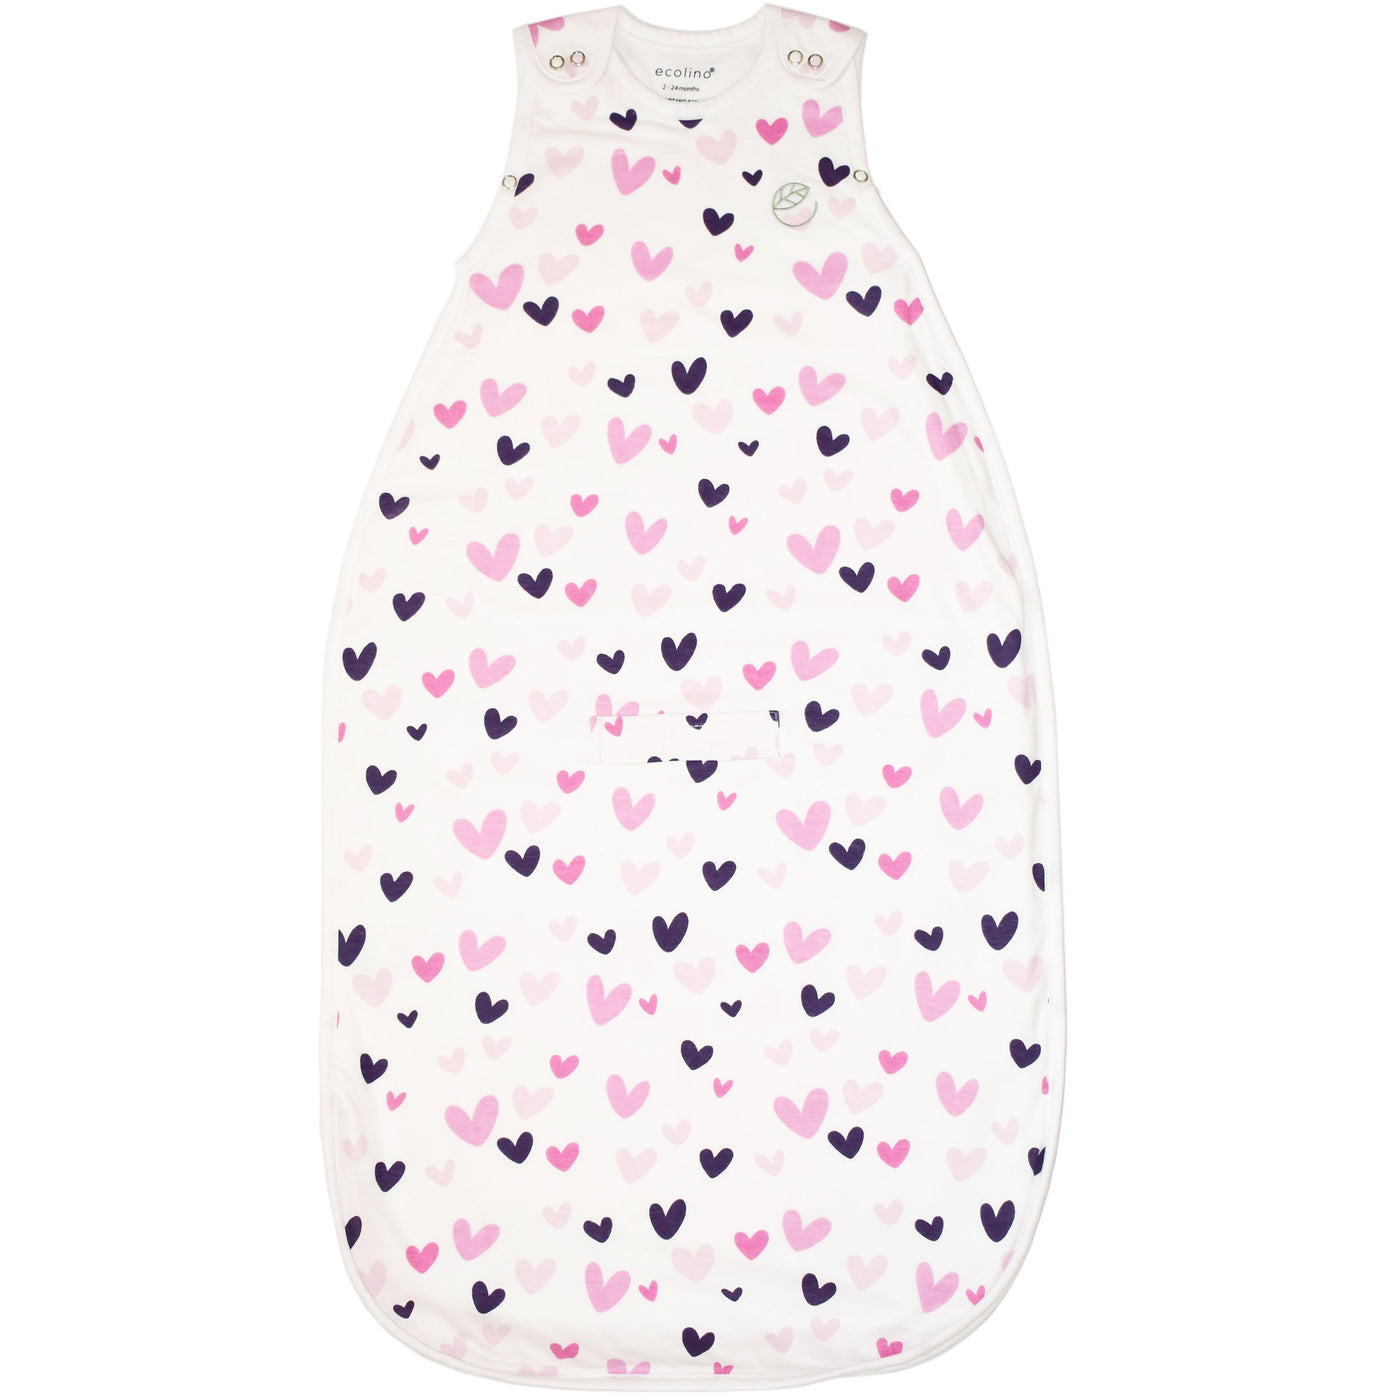 Imperfect Ecolino Adjustable Baby Sleep Bag, 100% Organic Cotton, Universal Size: 2 Months - 2 Years, Heart